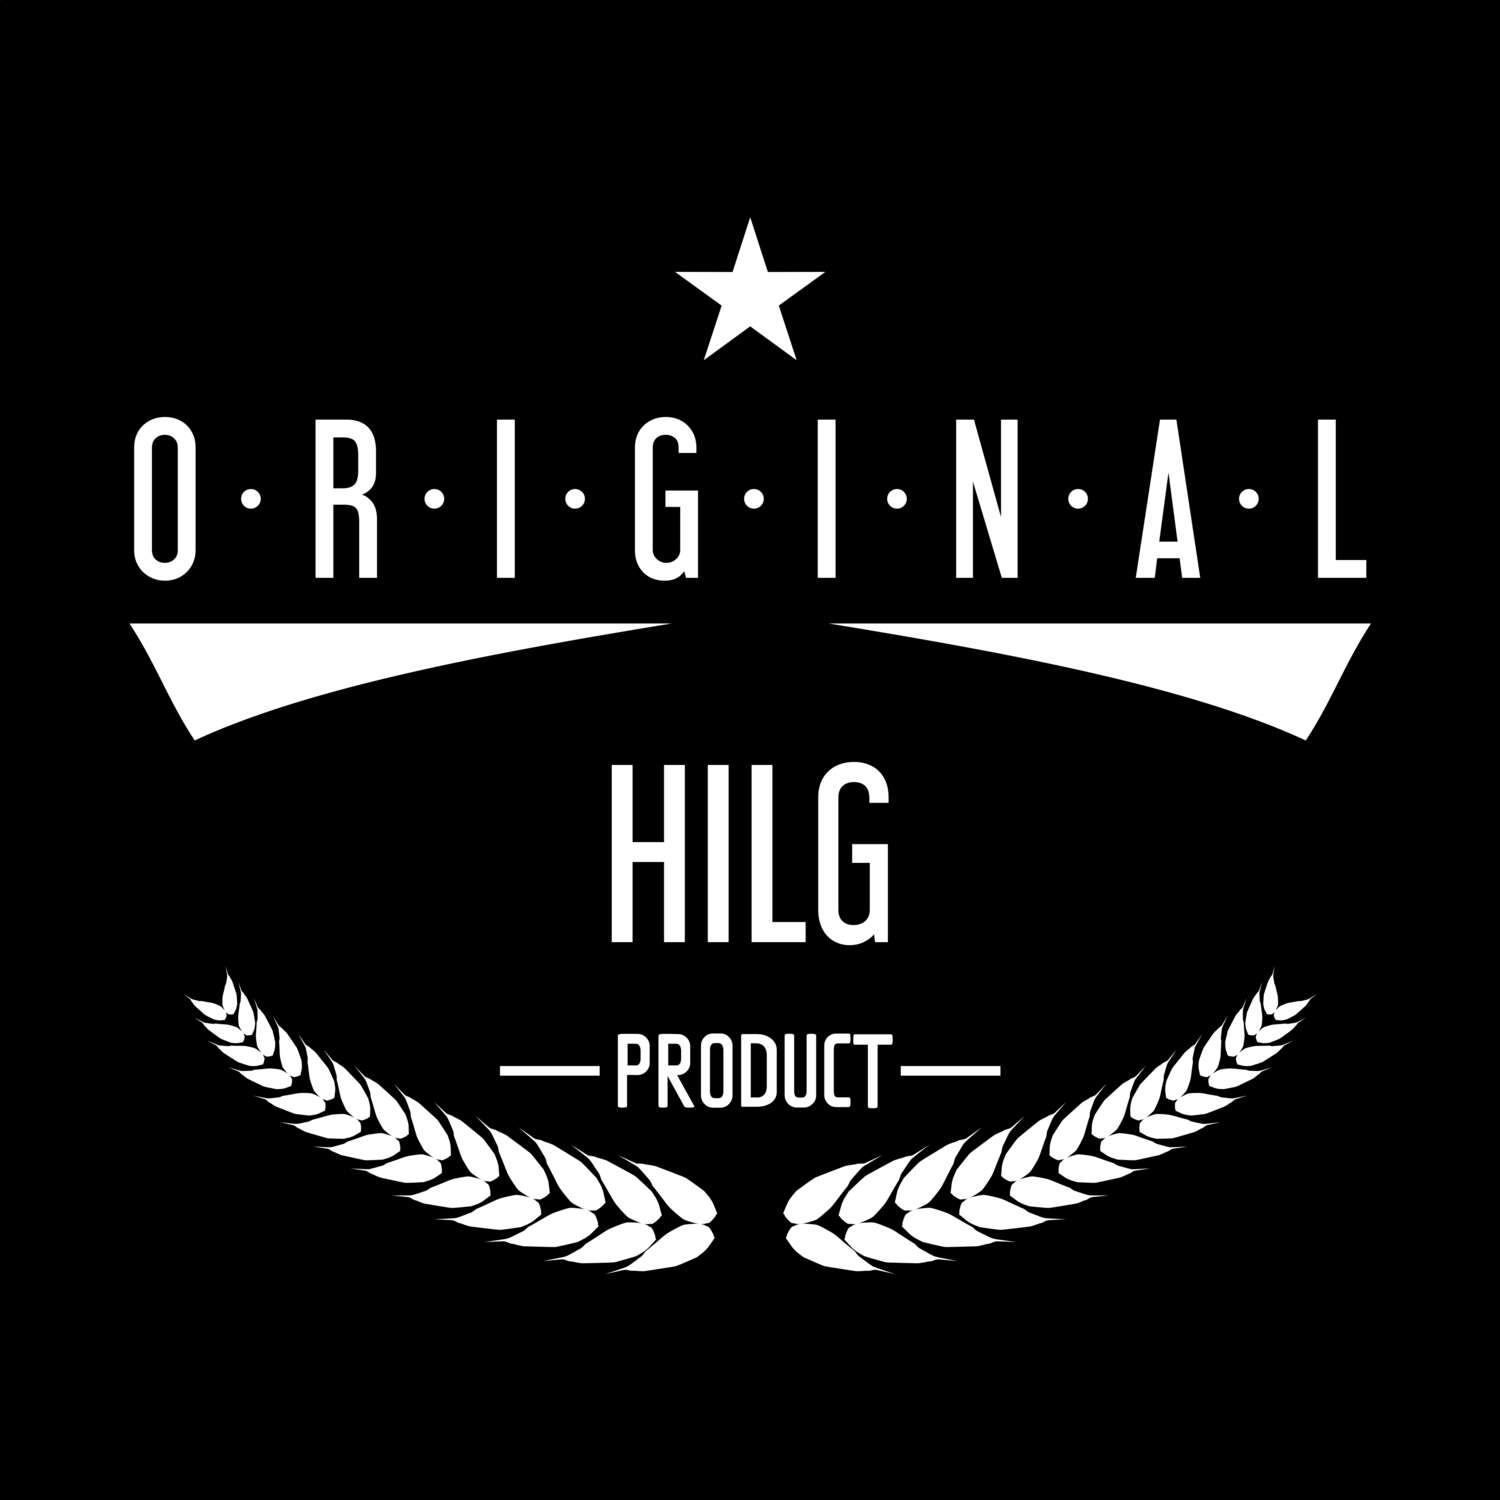 Hilg T-Shirt »Original Product«